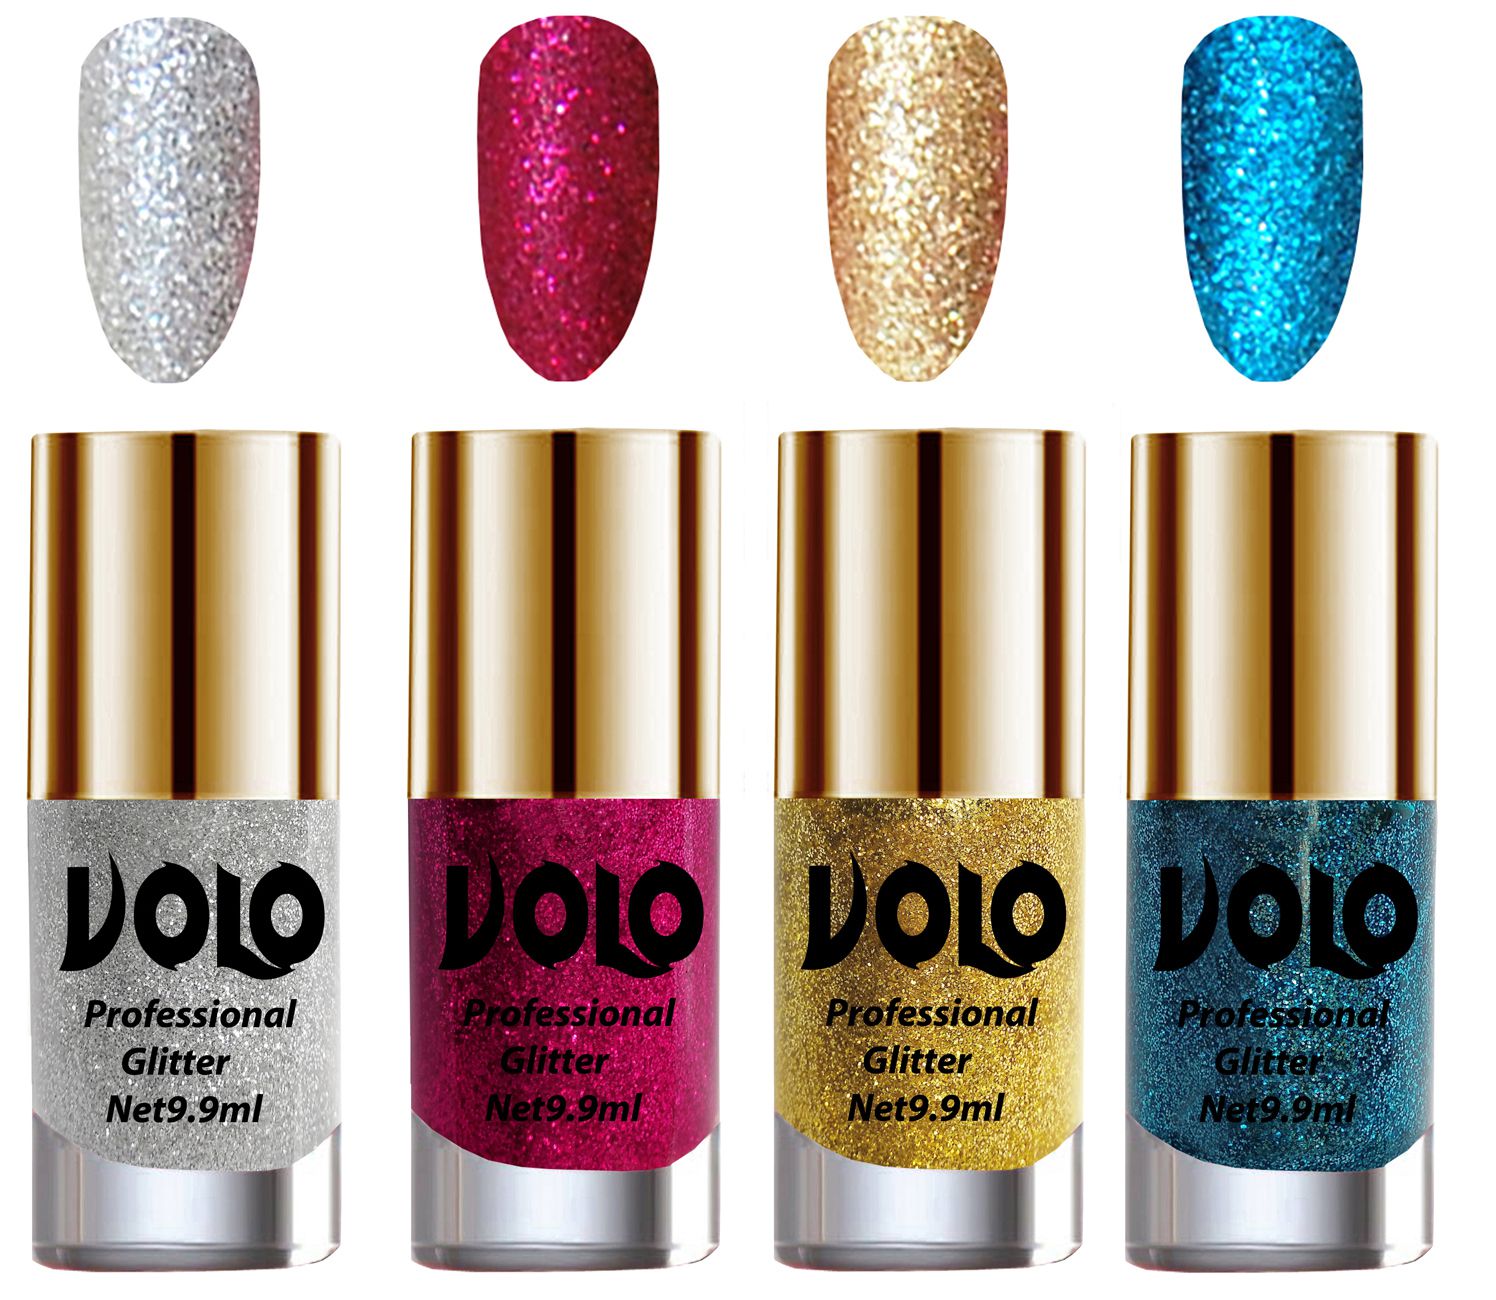     			VOLO Professionally Used Glitter Shine Nail Polish Silver,Magenta,Gold Blue Pack of 4 39 mL